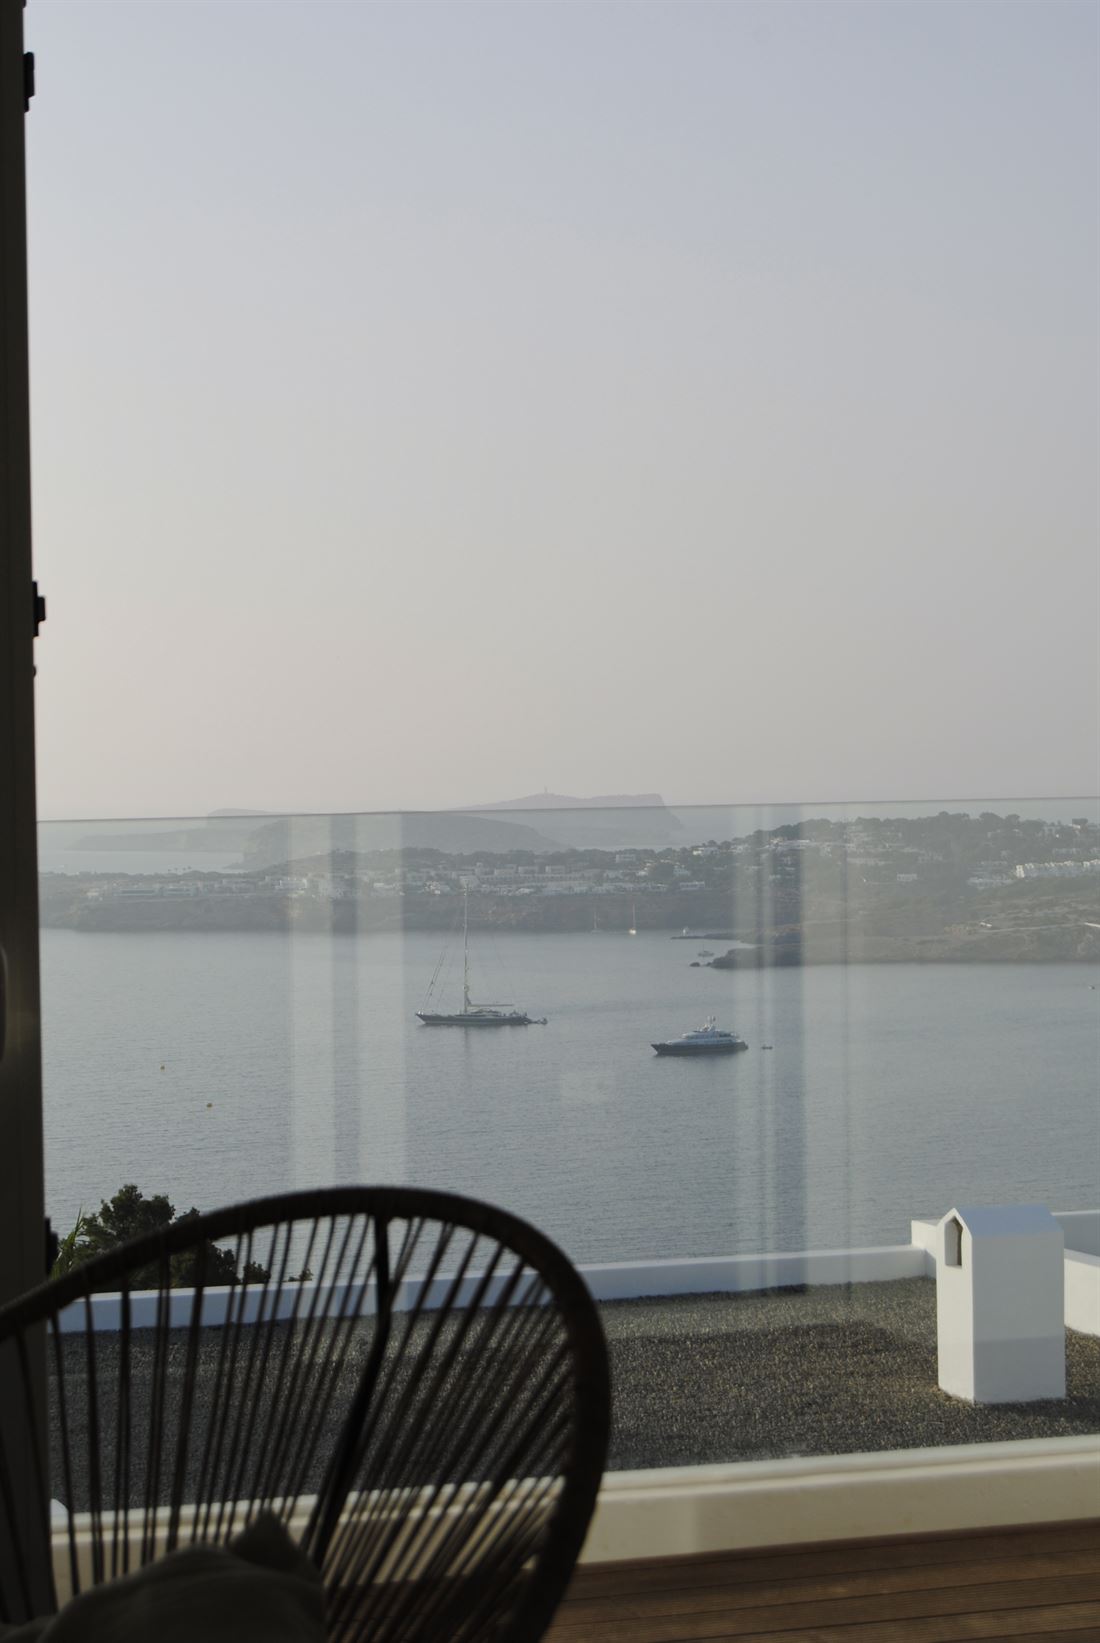 Two luxury villas with beautiful sea views over the coast of Cala Moli